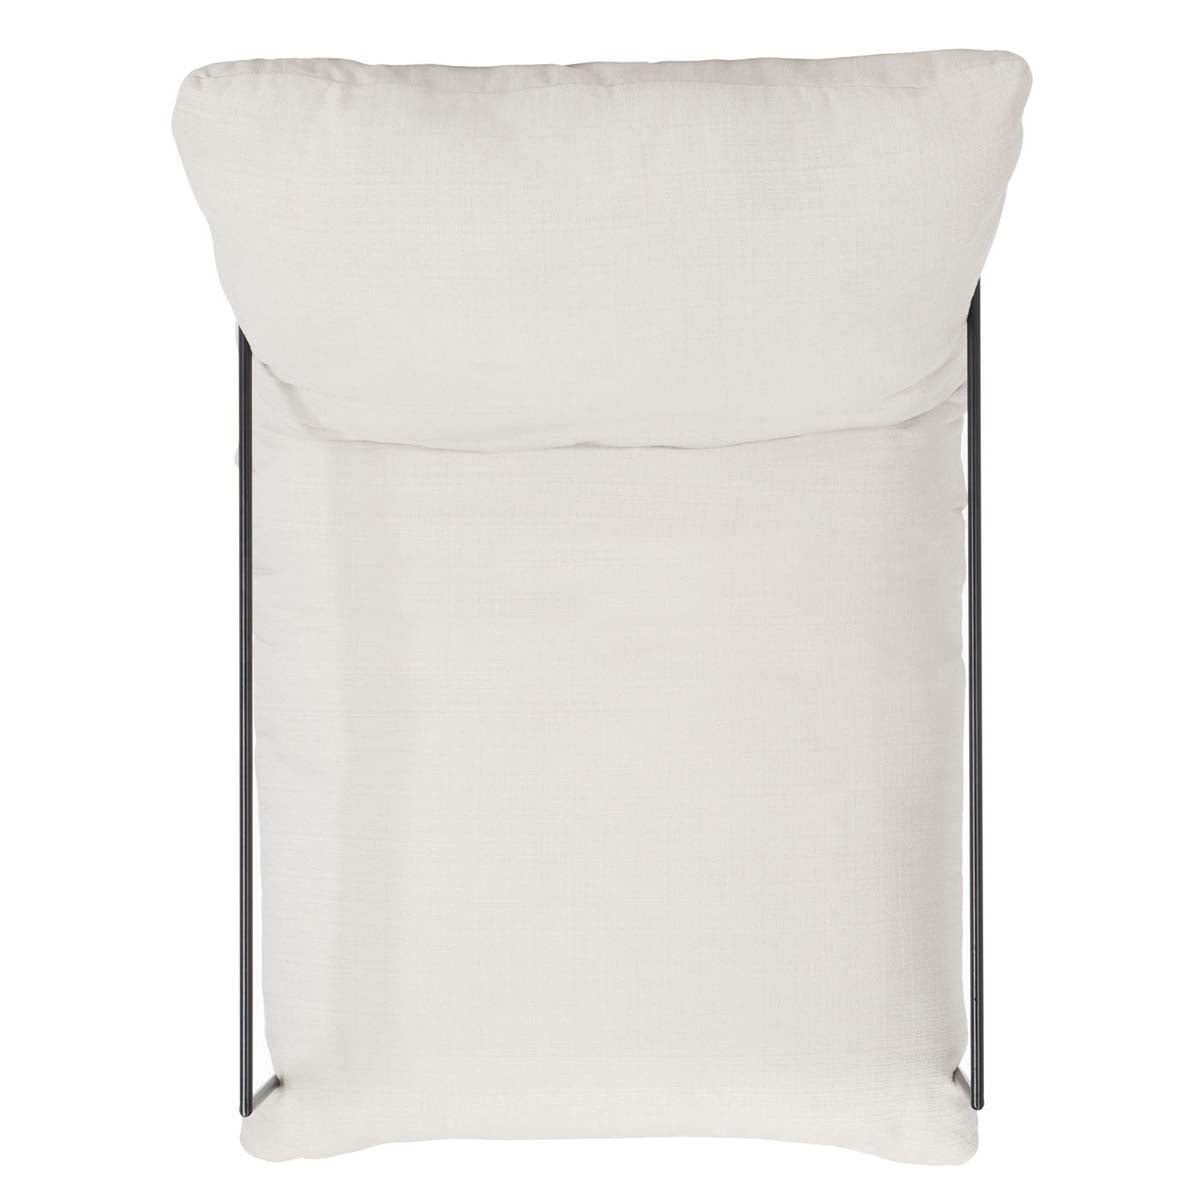 Safavieh Portland Pillow Top Accent Chair , ACH4511 - Ivory/Black